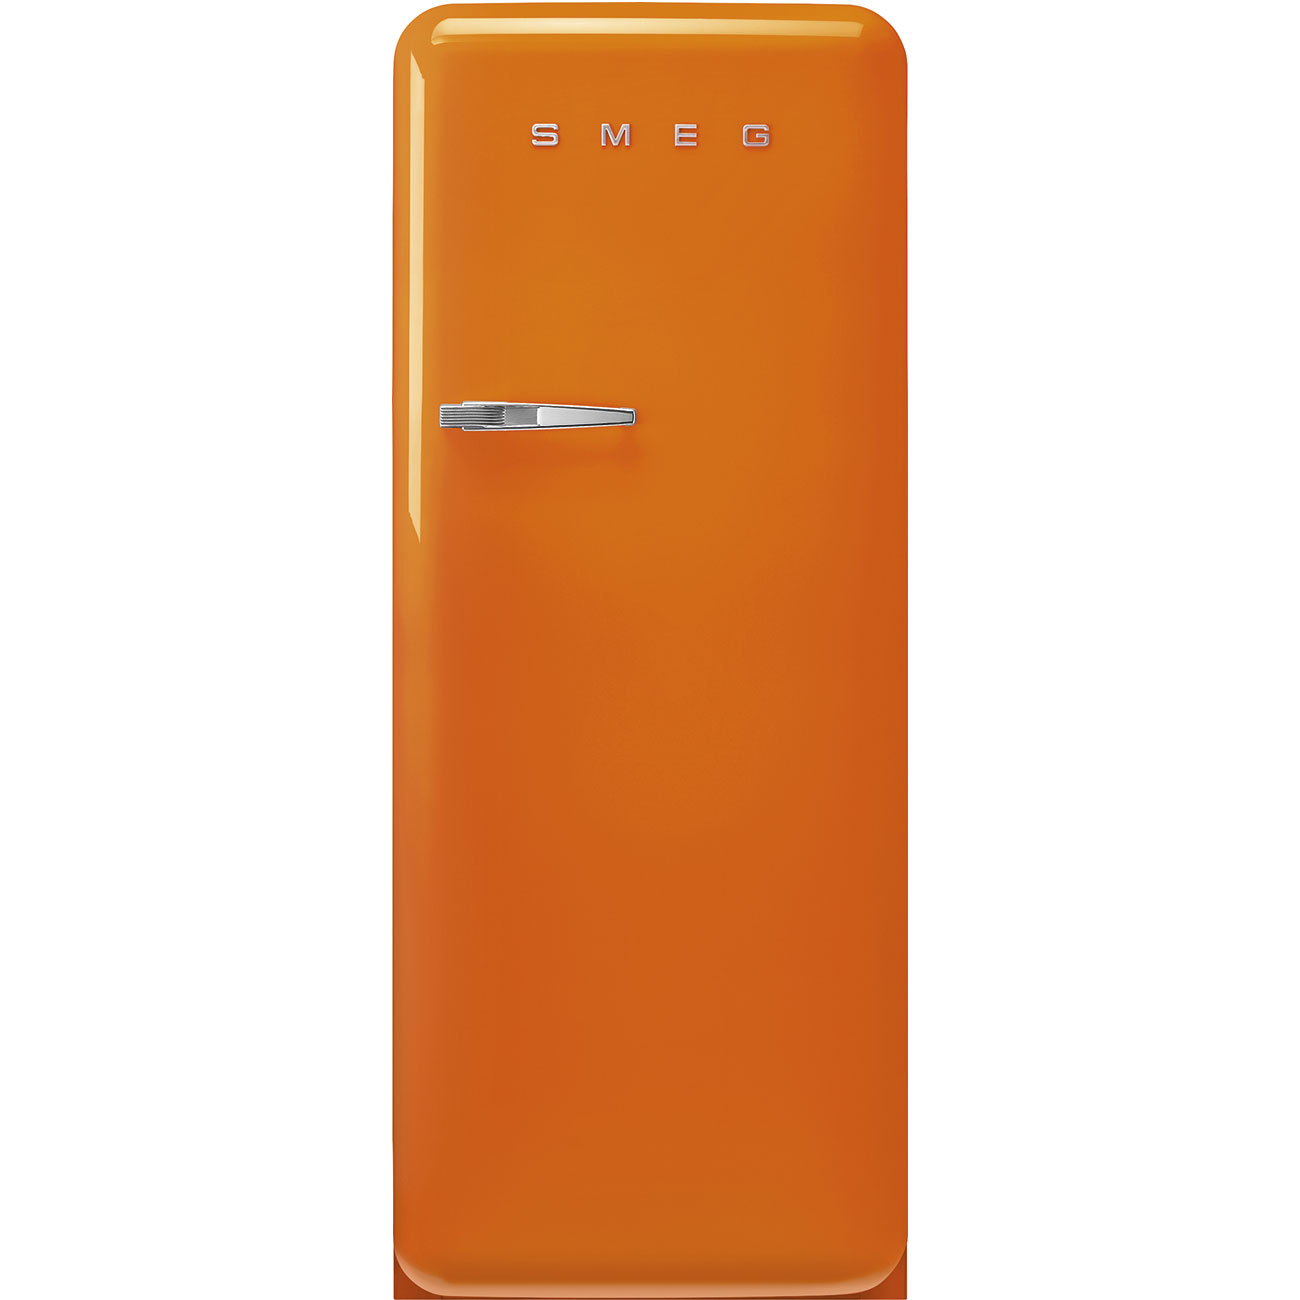 Oranje koelkast - Smeg_1